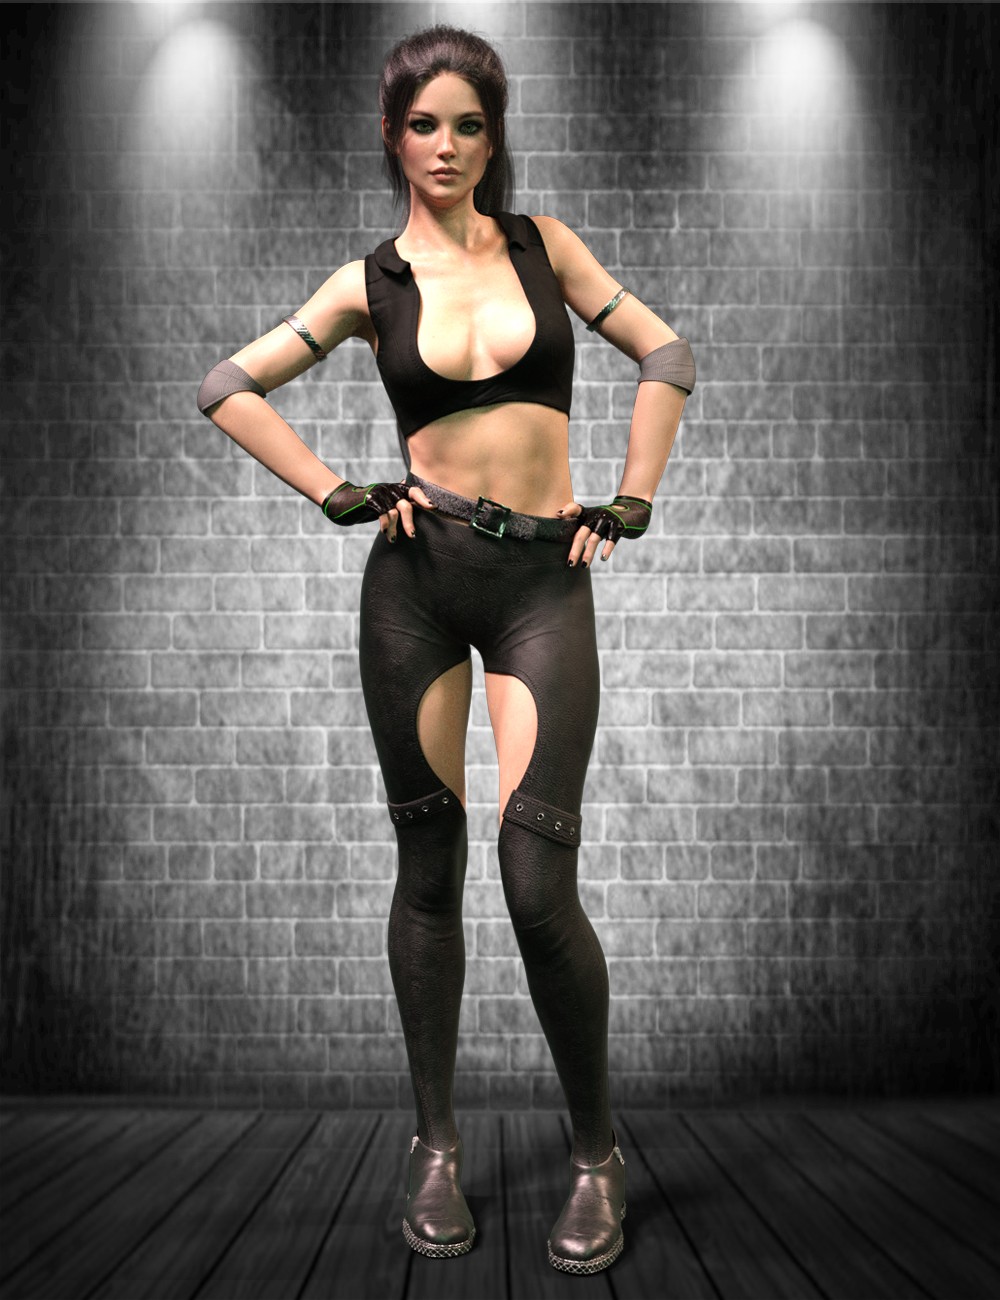 DAZ 3D - X-Fashion Combat Outfit for Genesis 8 Female.